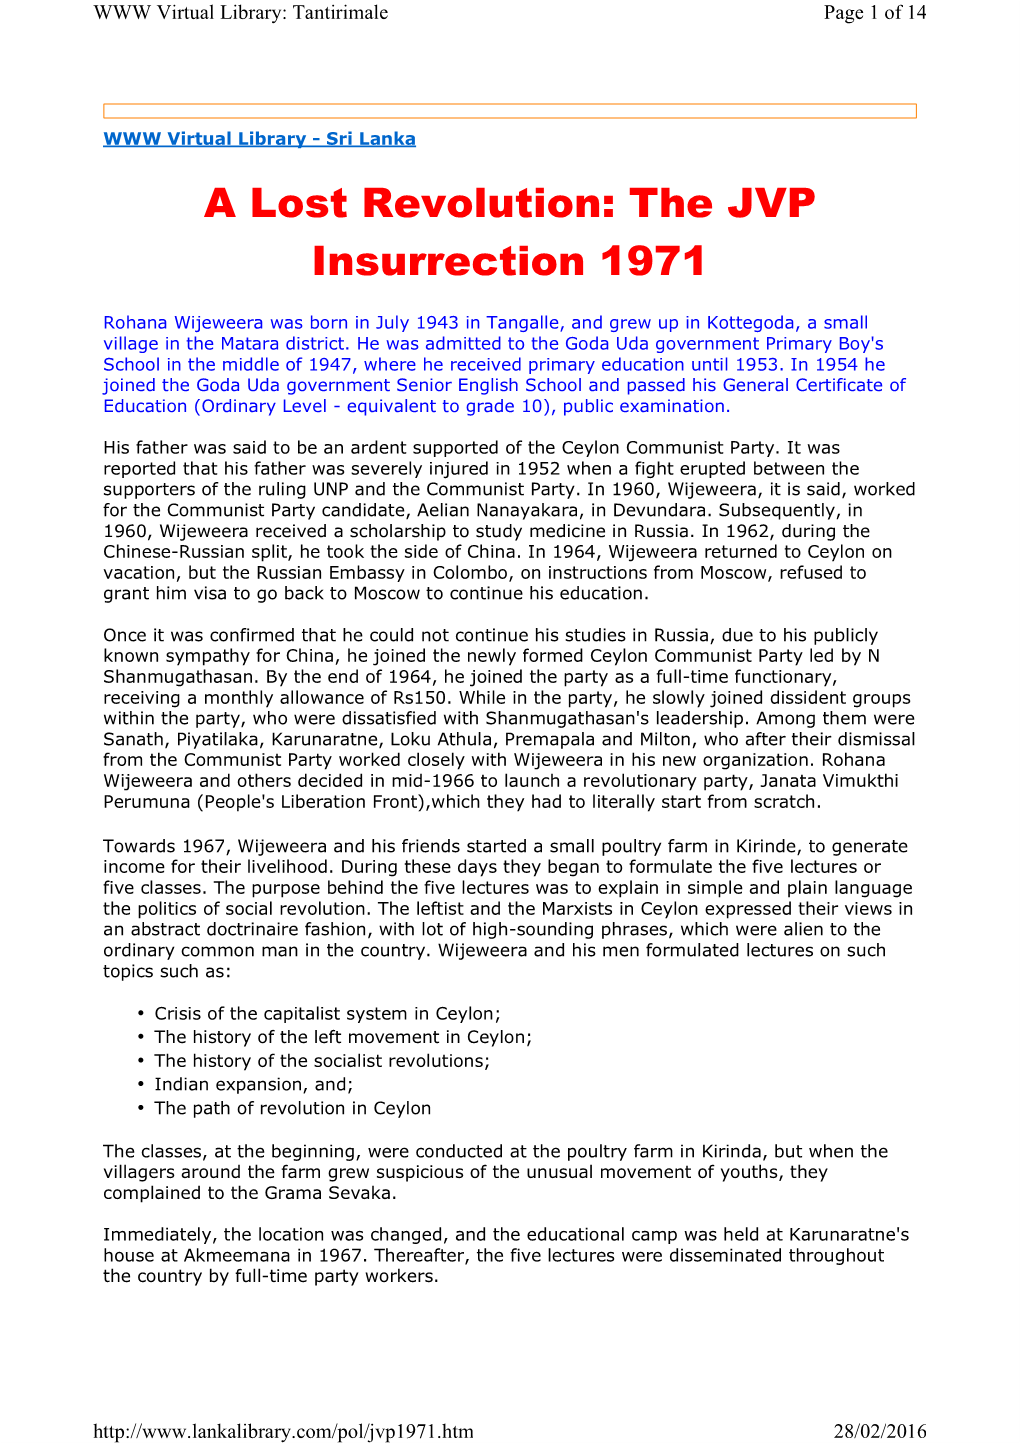 A Lost Revolution: the JVP Insurrection 1971